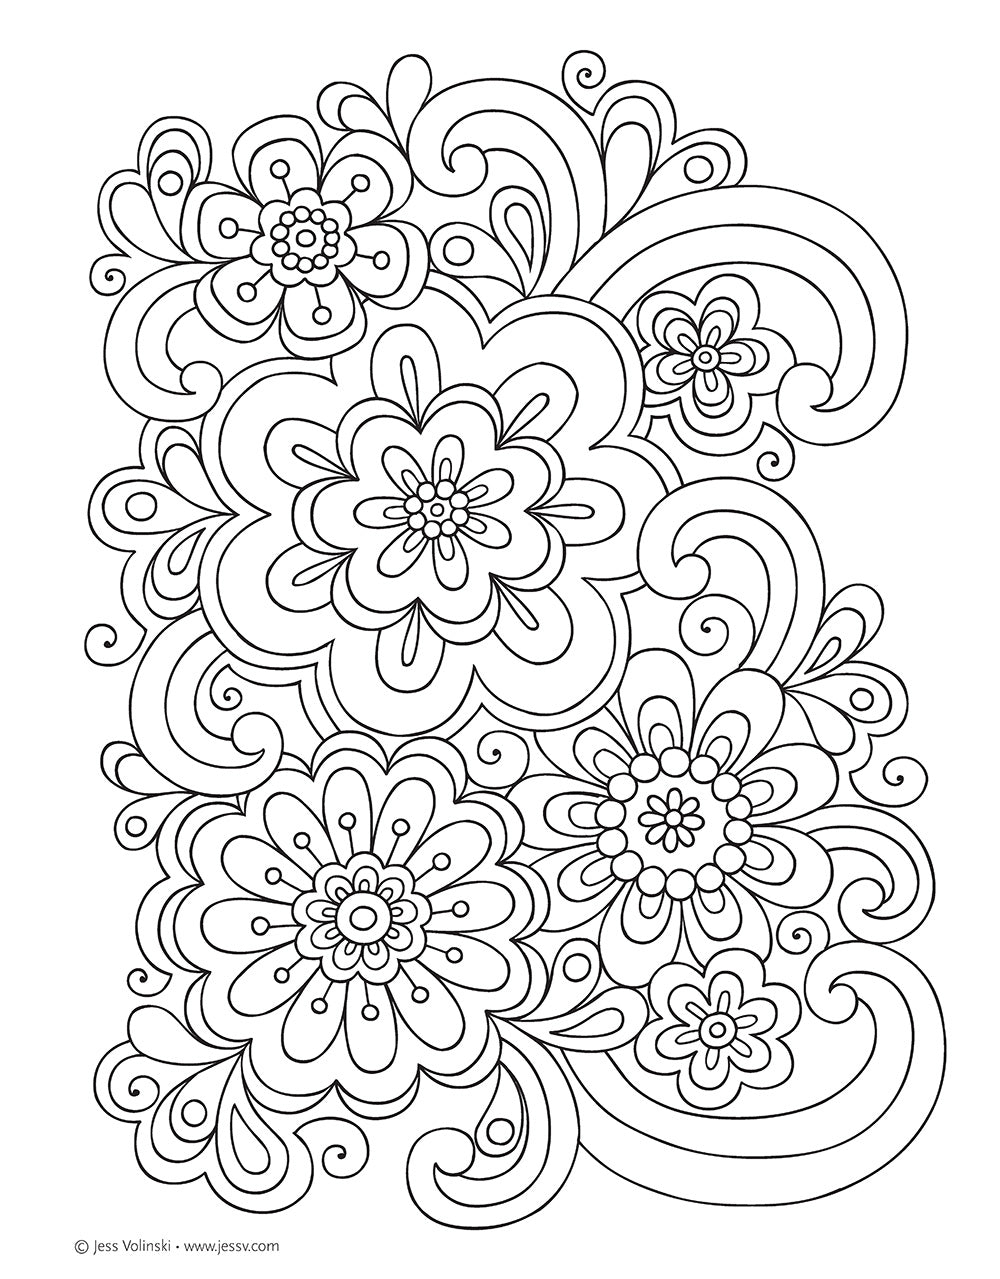 Notebook Doodles Flowers